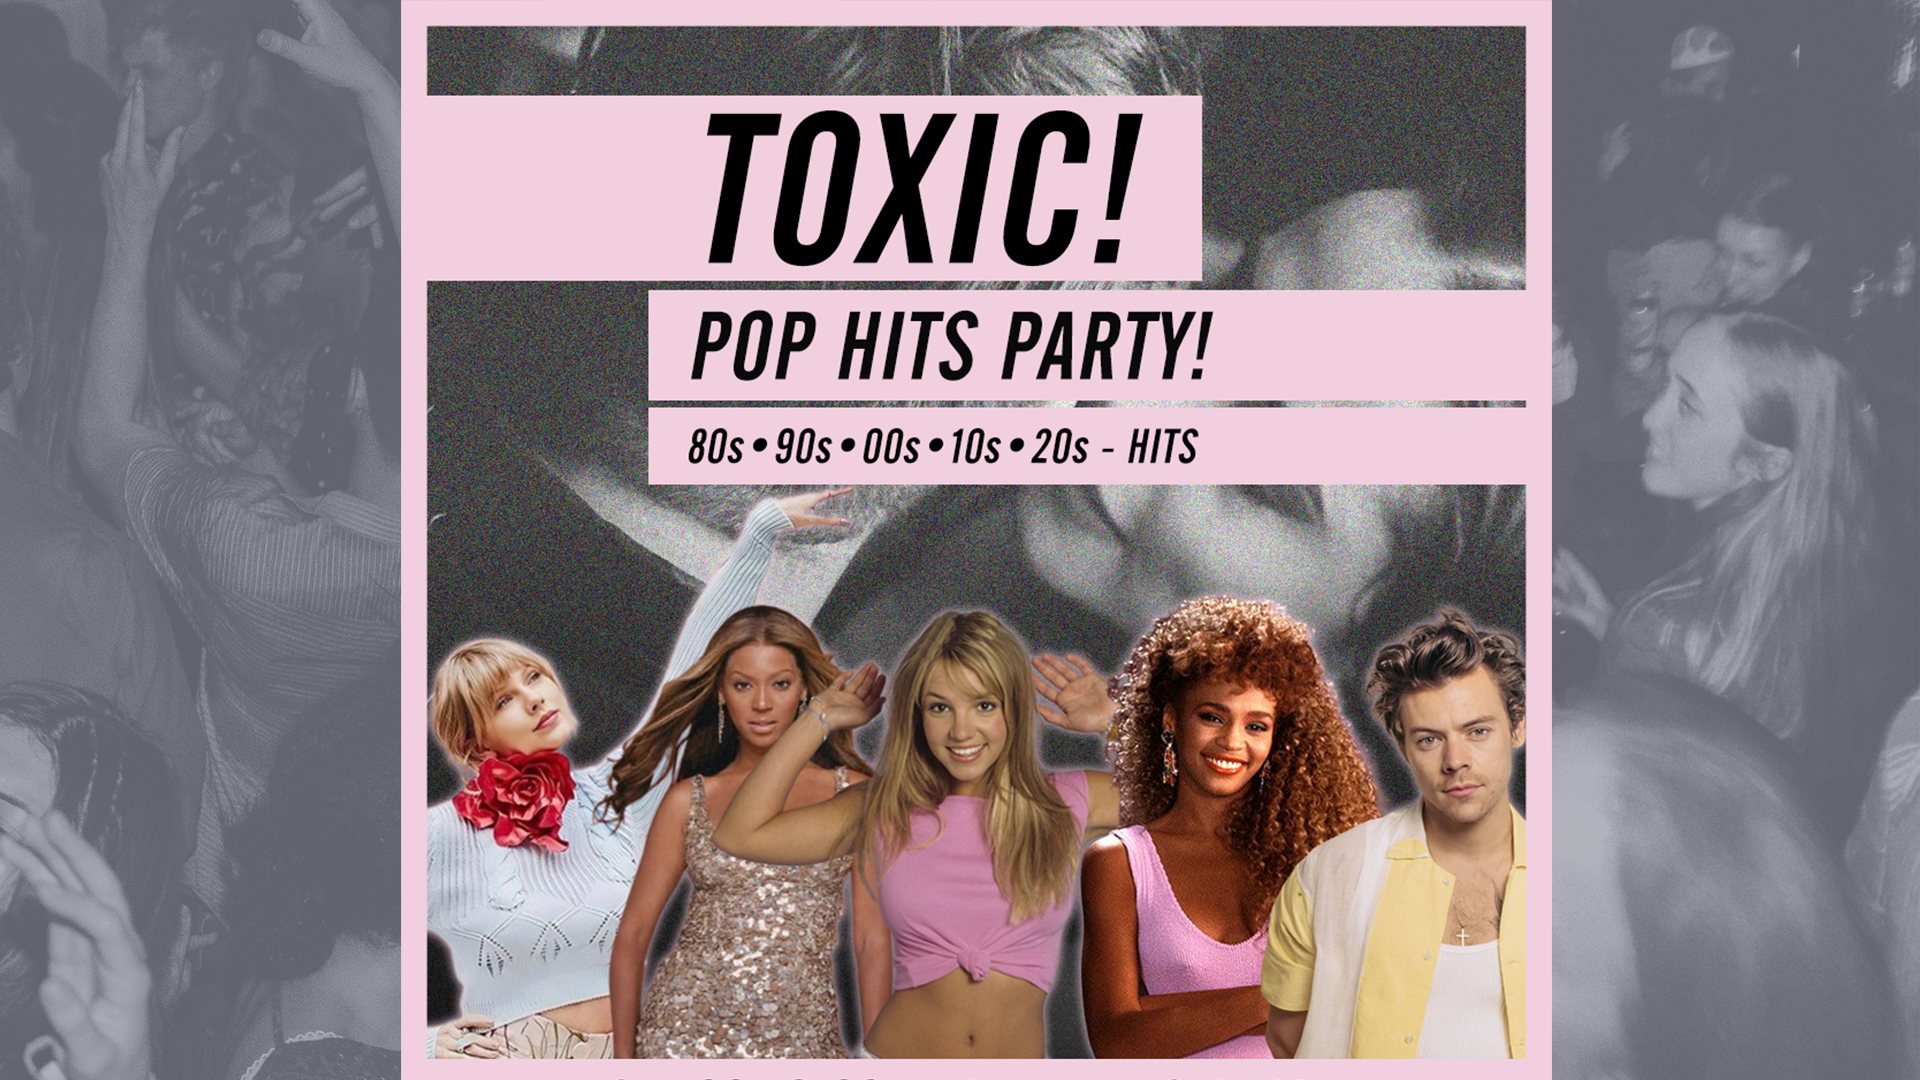 Toxic! Pop Hits Party